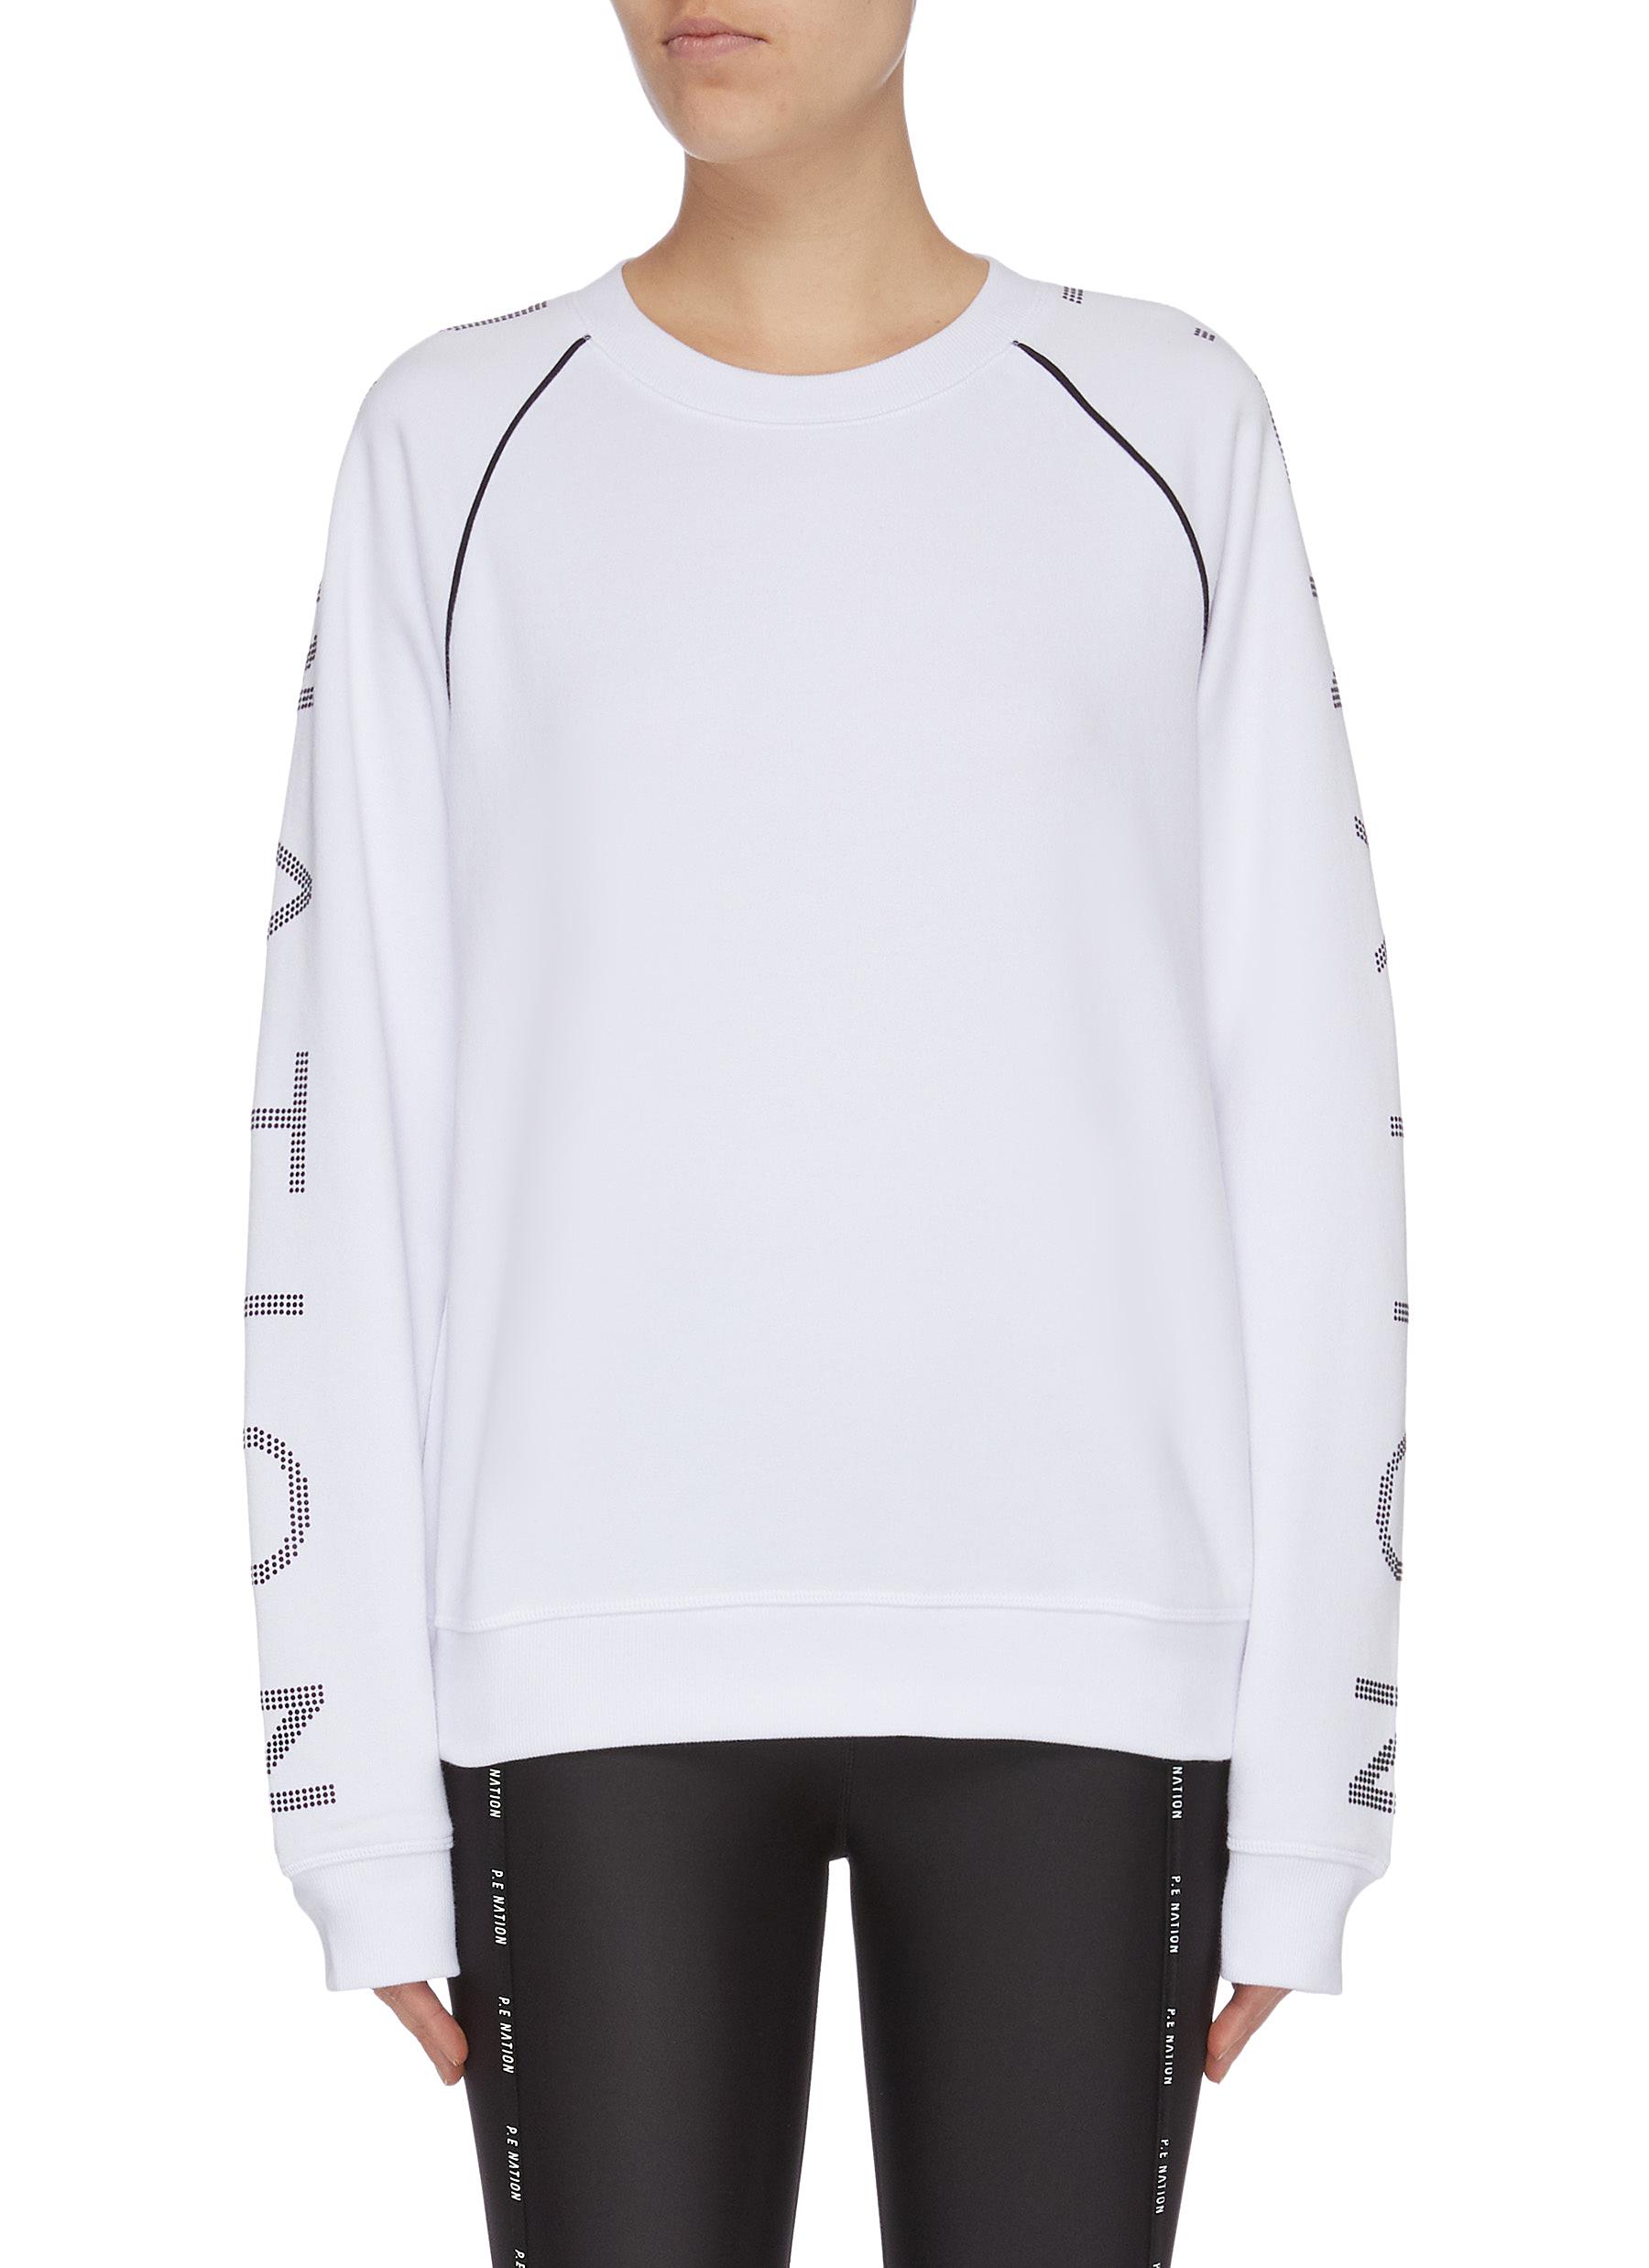 Highline logo sleeve sweatshirt by P.E Nation